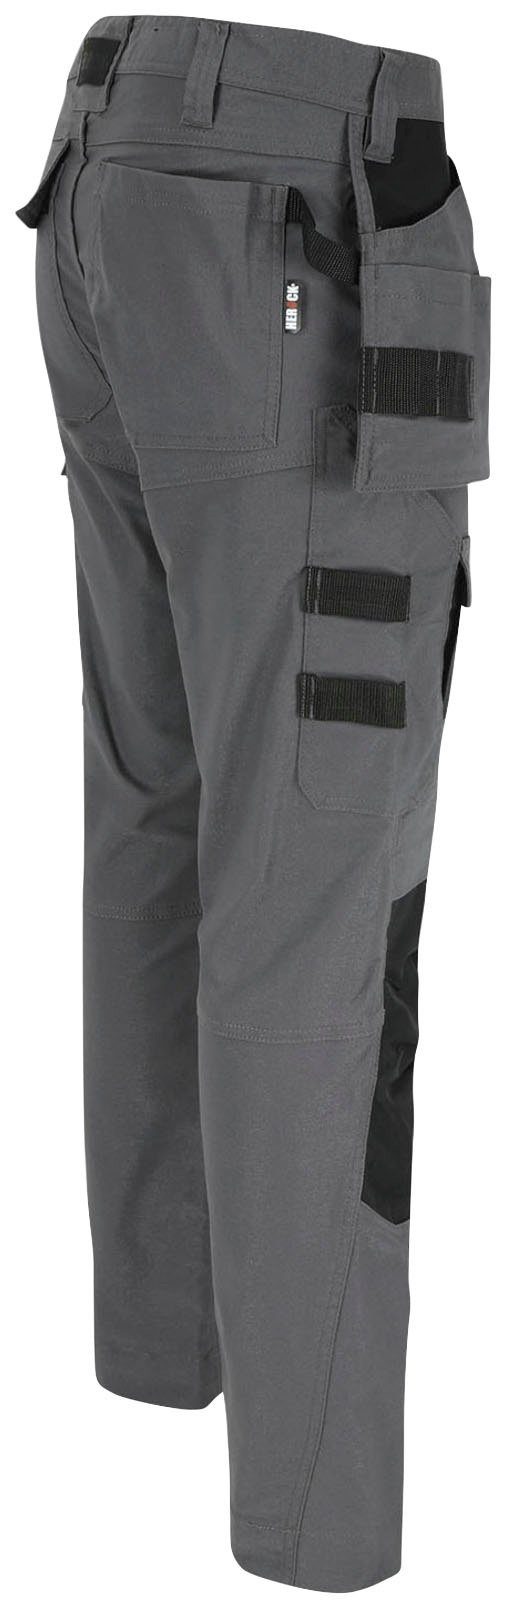 Herock Arbeitshose HEROCLES (Coolmax® Technologie) Multi-pocket, grau sehr Nageltaschen Stretch, feste robust